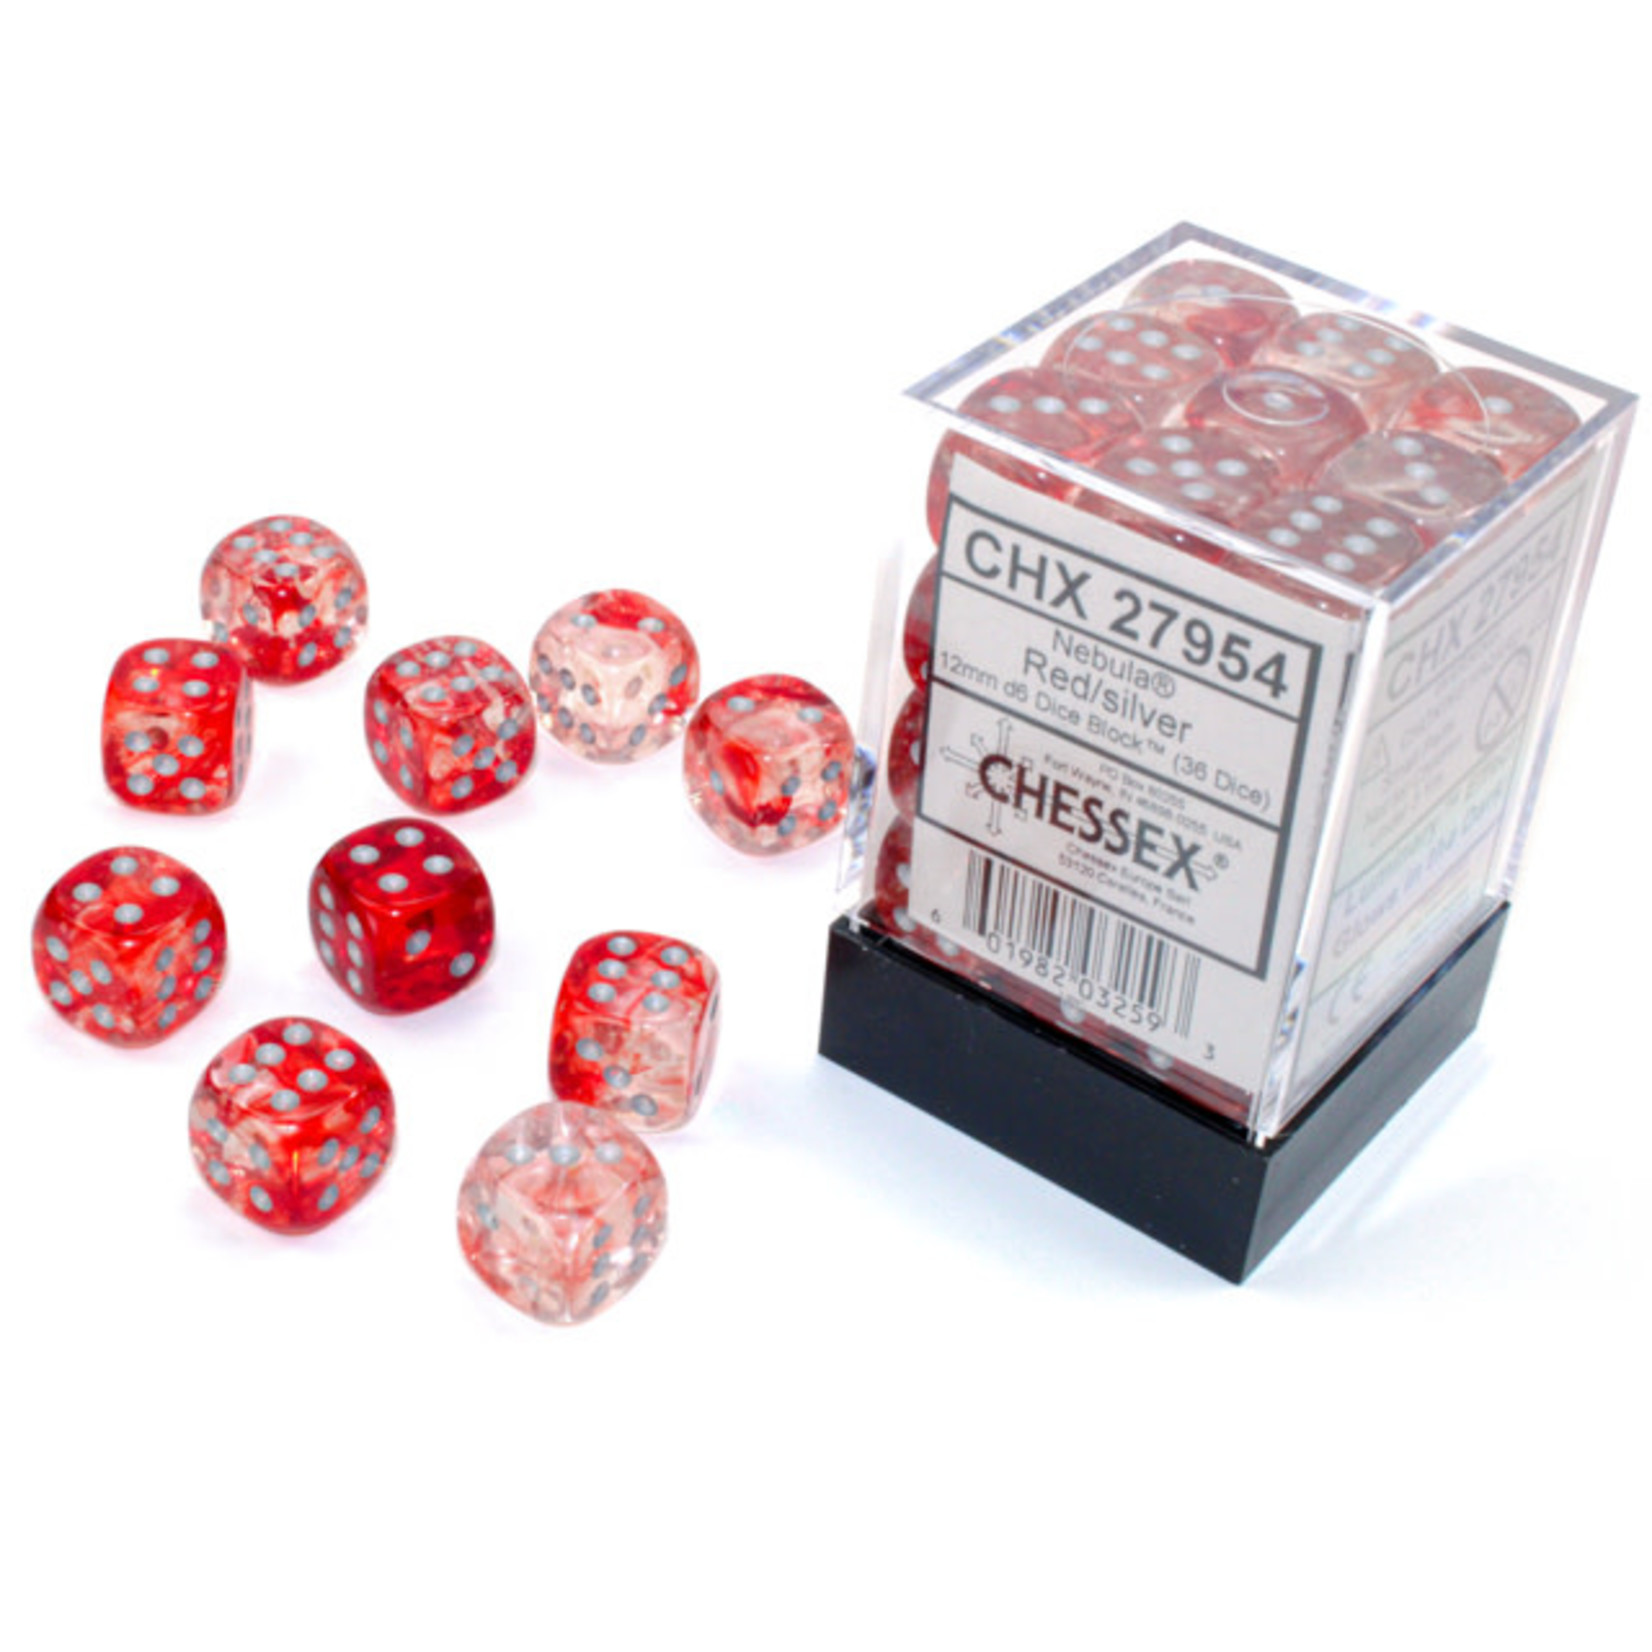 Chessex Dice 16mm 27954 36pc Nebula Red/Silver Luminary